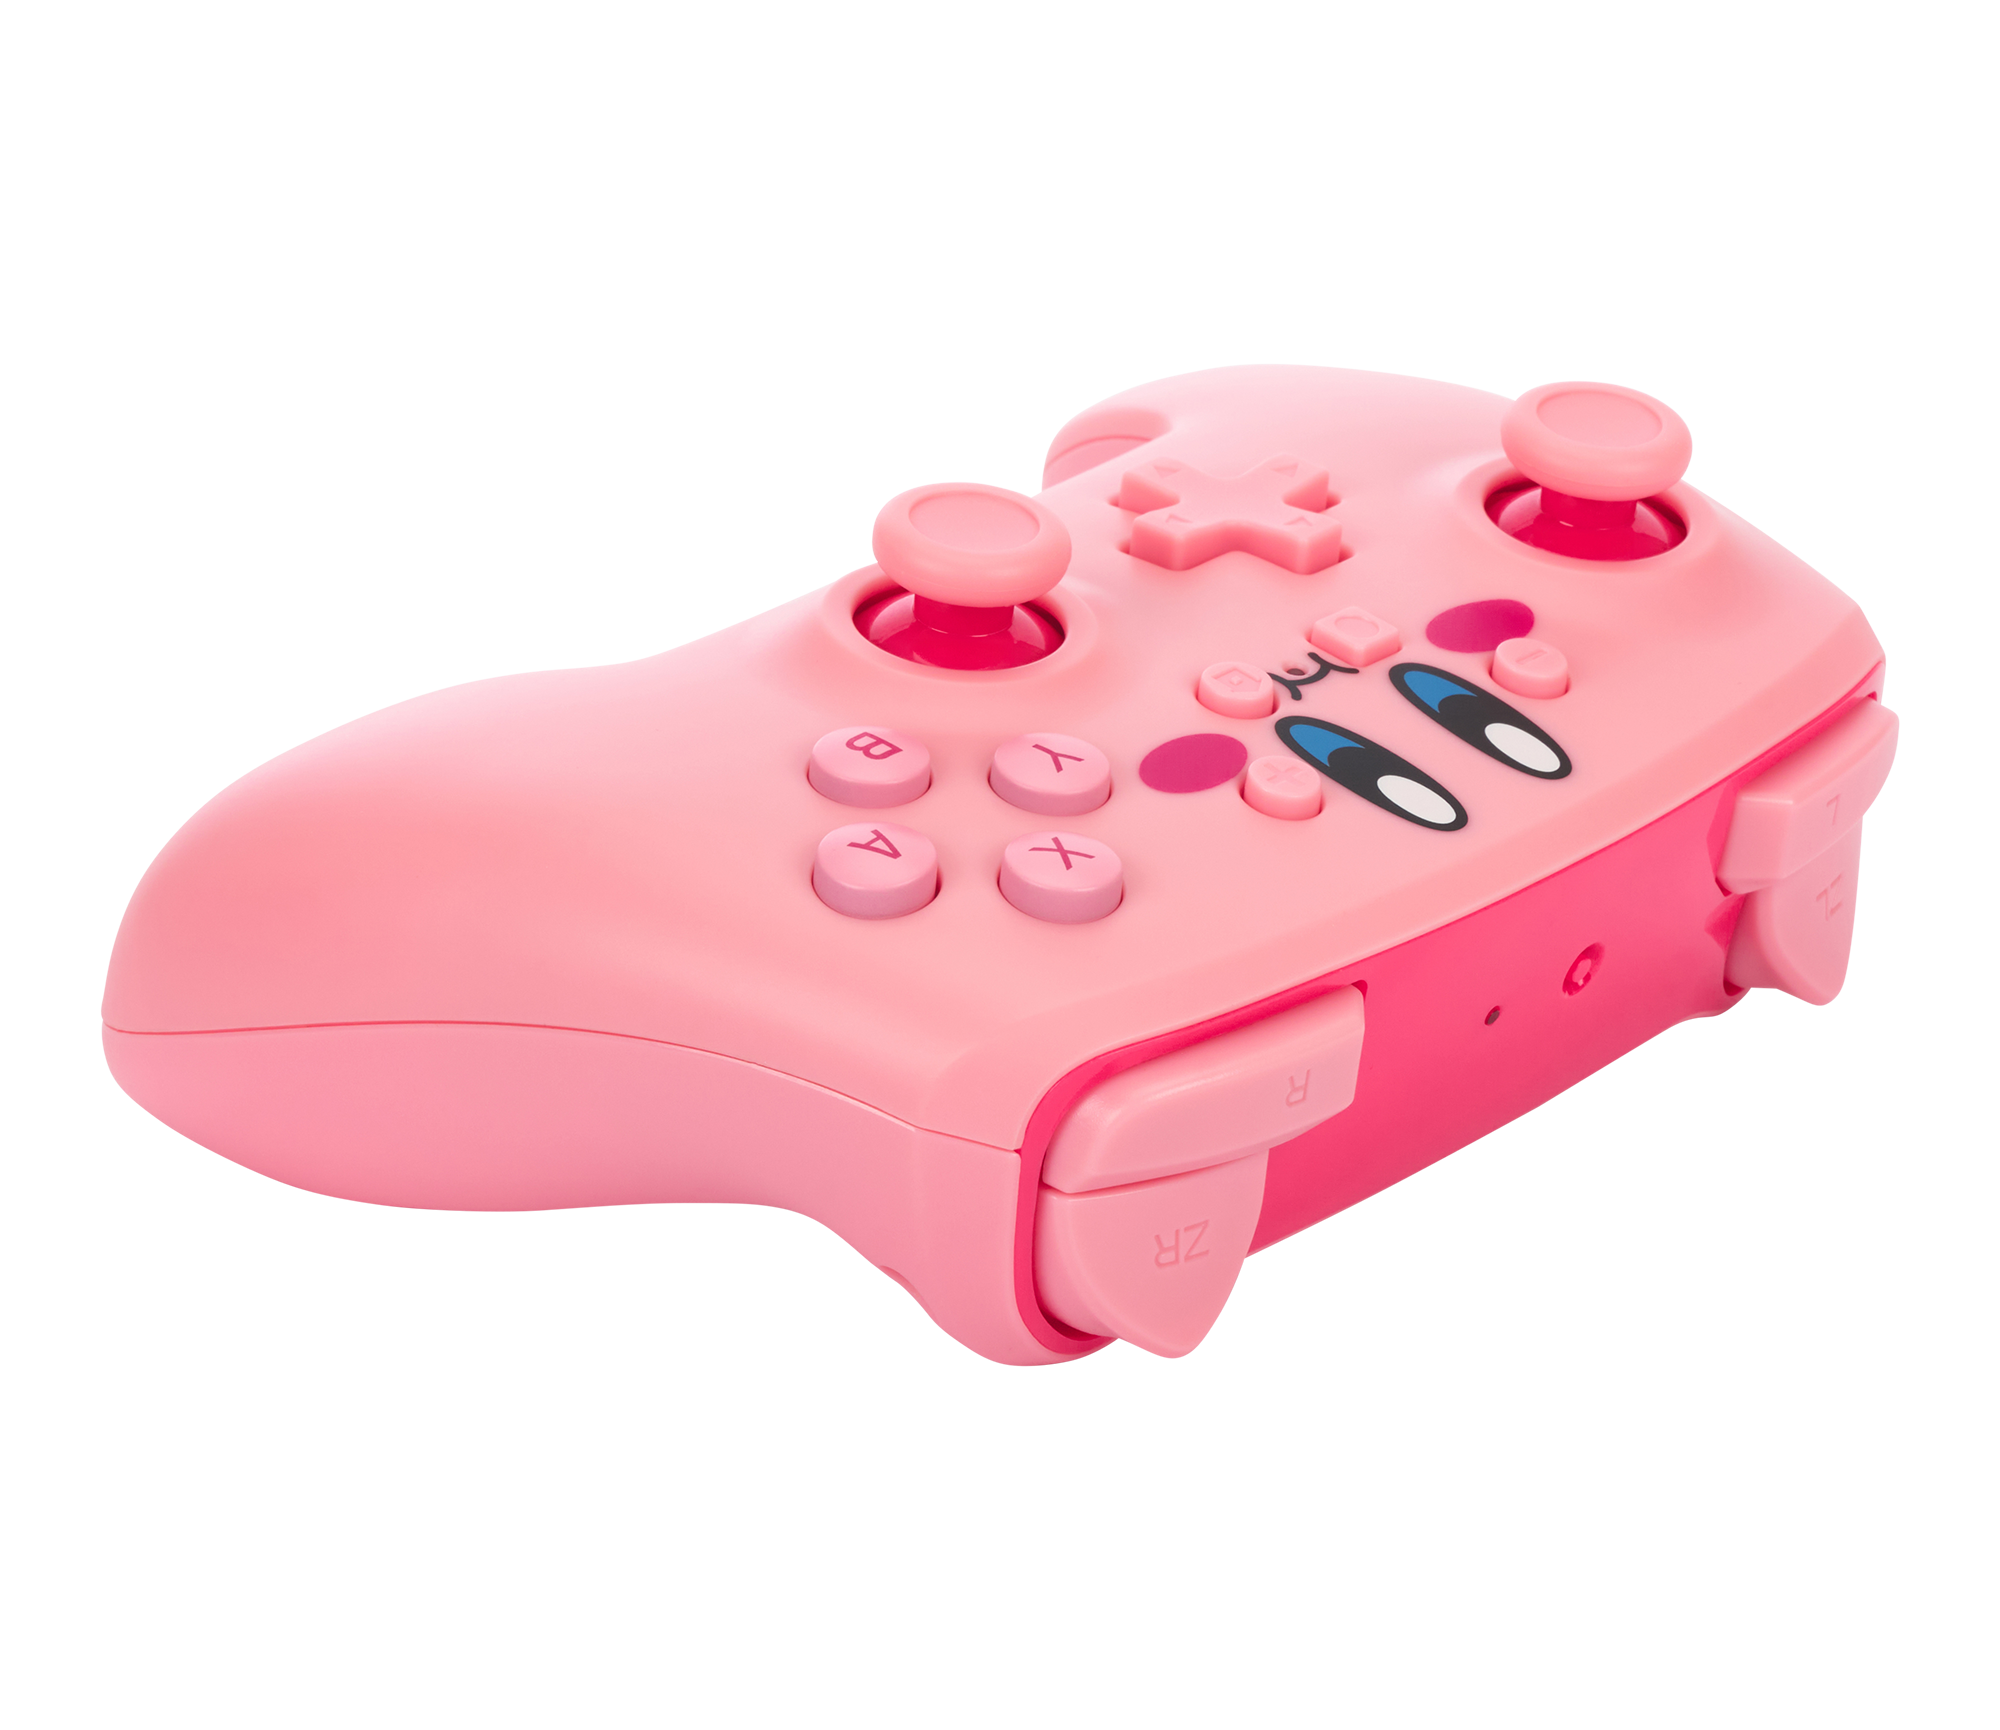 PowerA Wireless Controller for Nintendo Switch Kirby